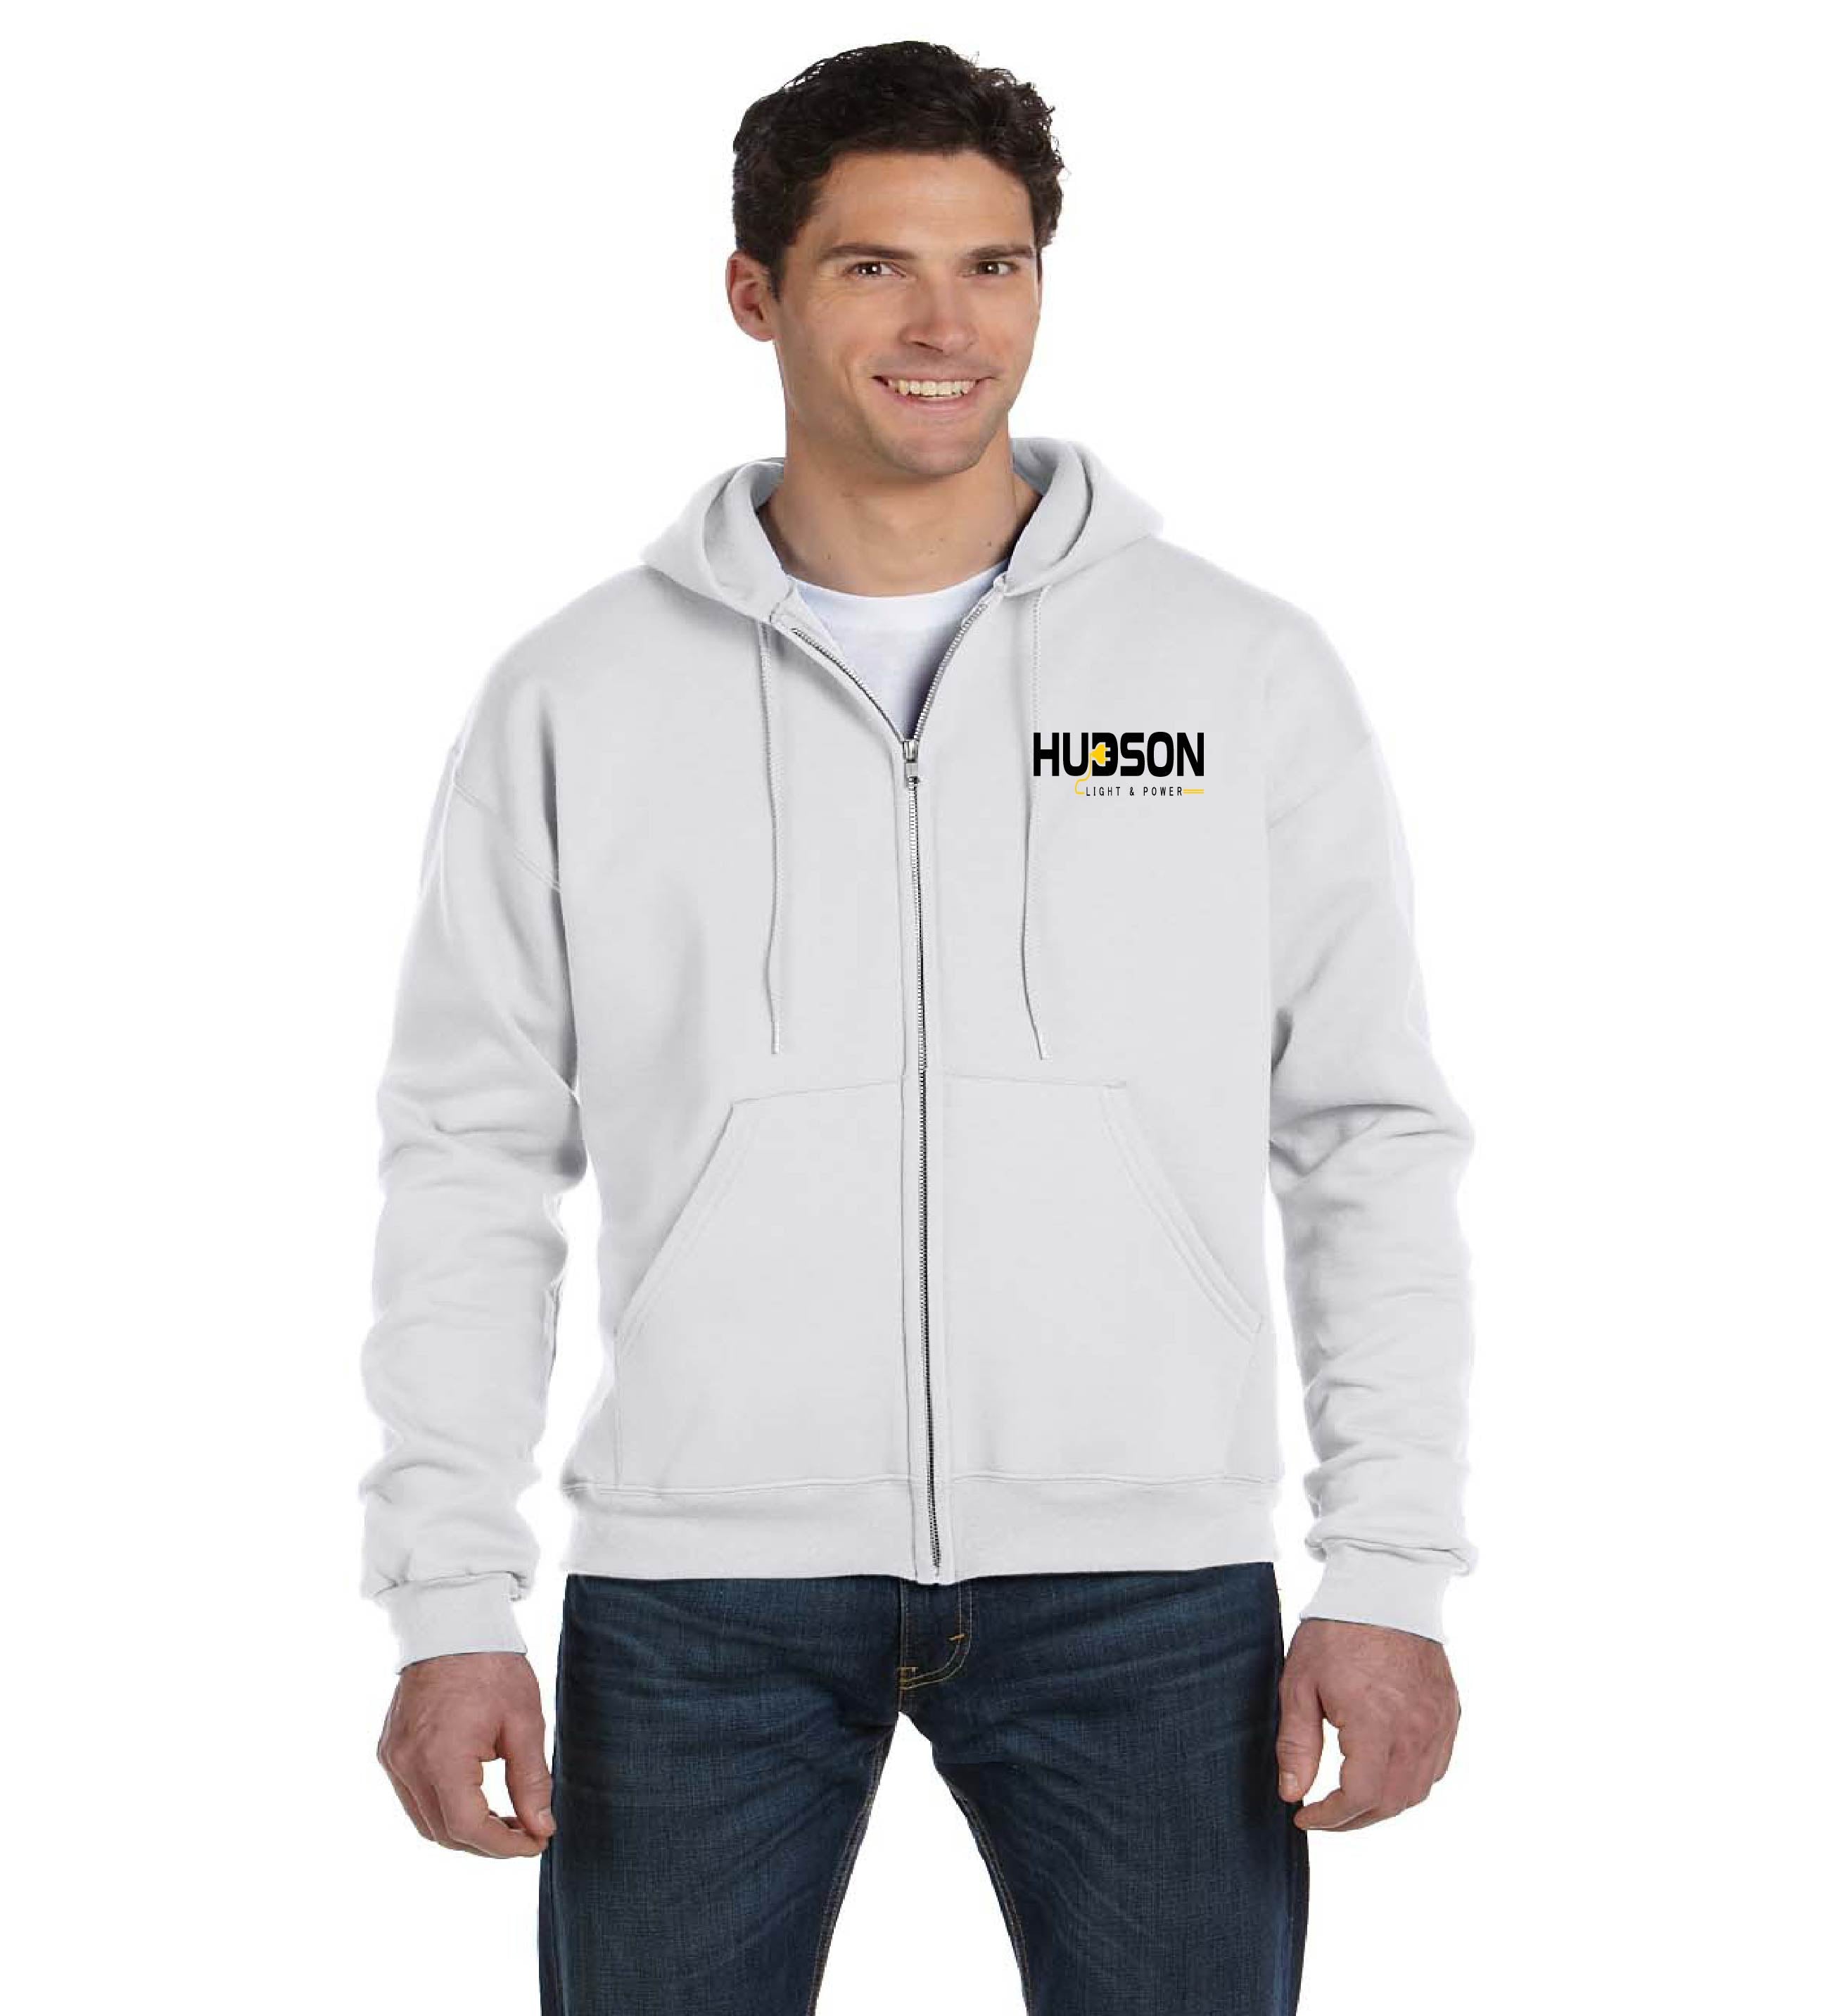 Hudson Light & Power Champion zip hoodie